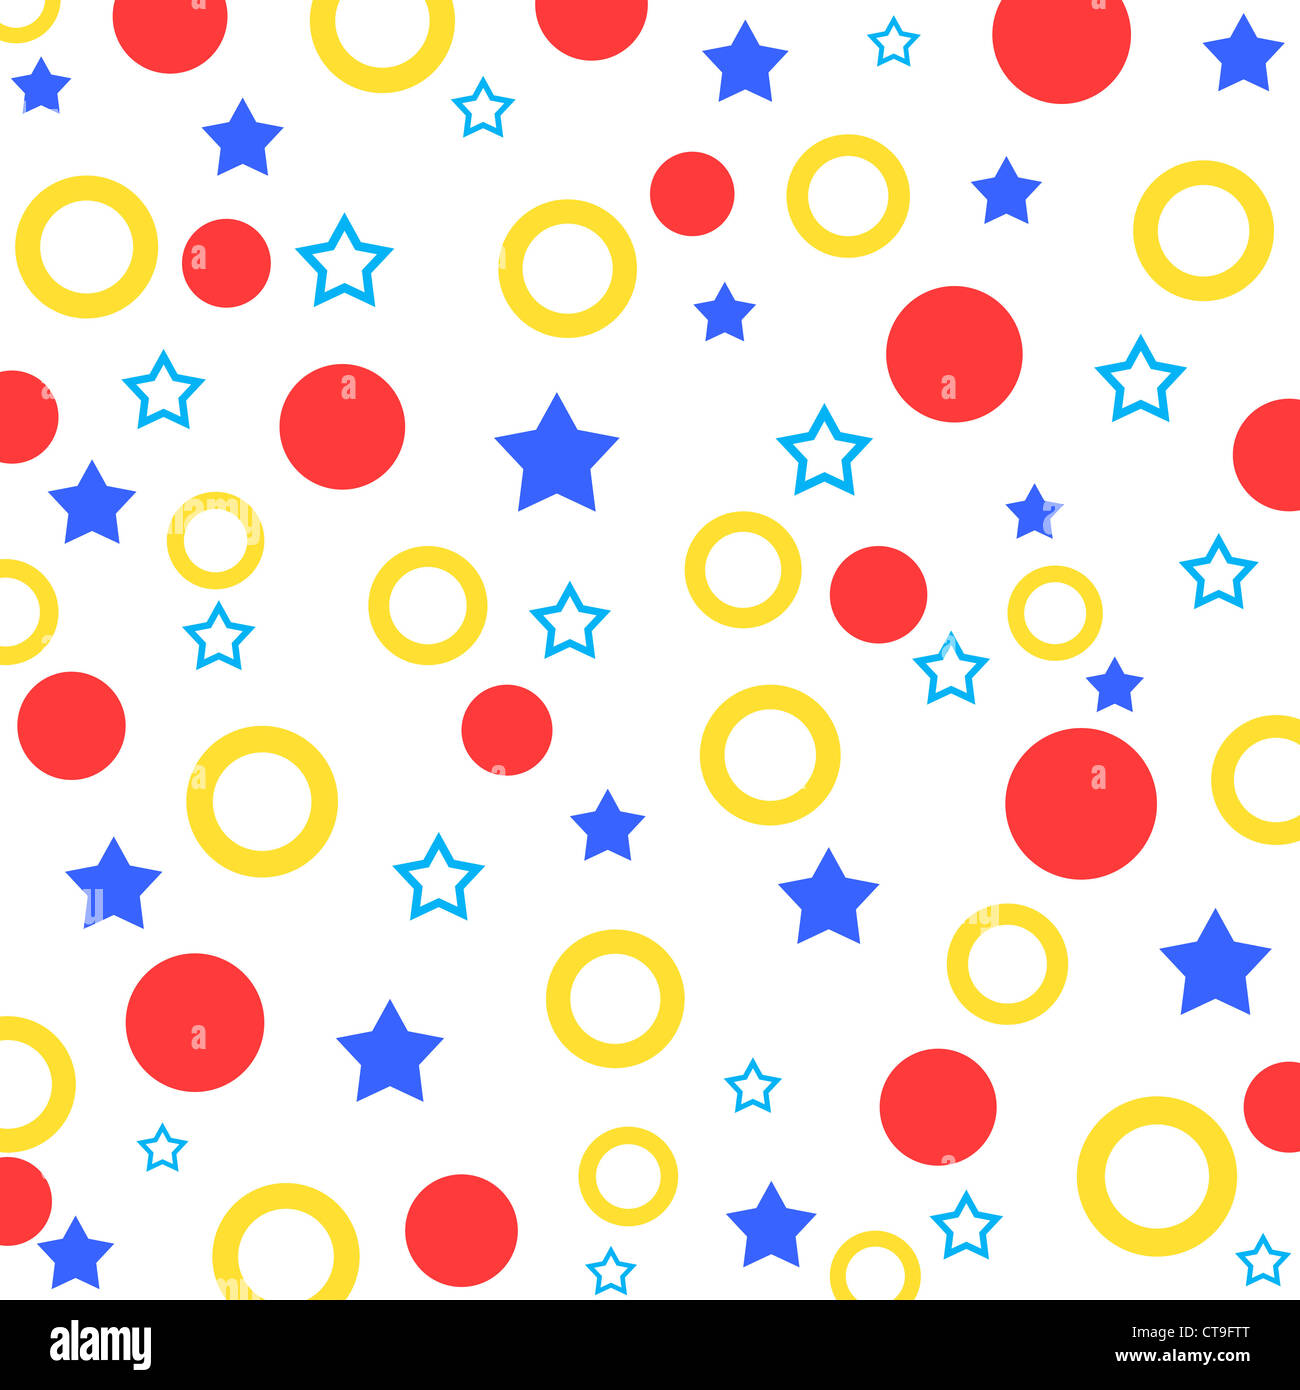 Colorful celebration stars and circles pattern Stock Photo